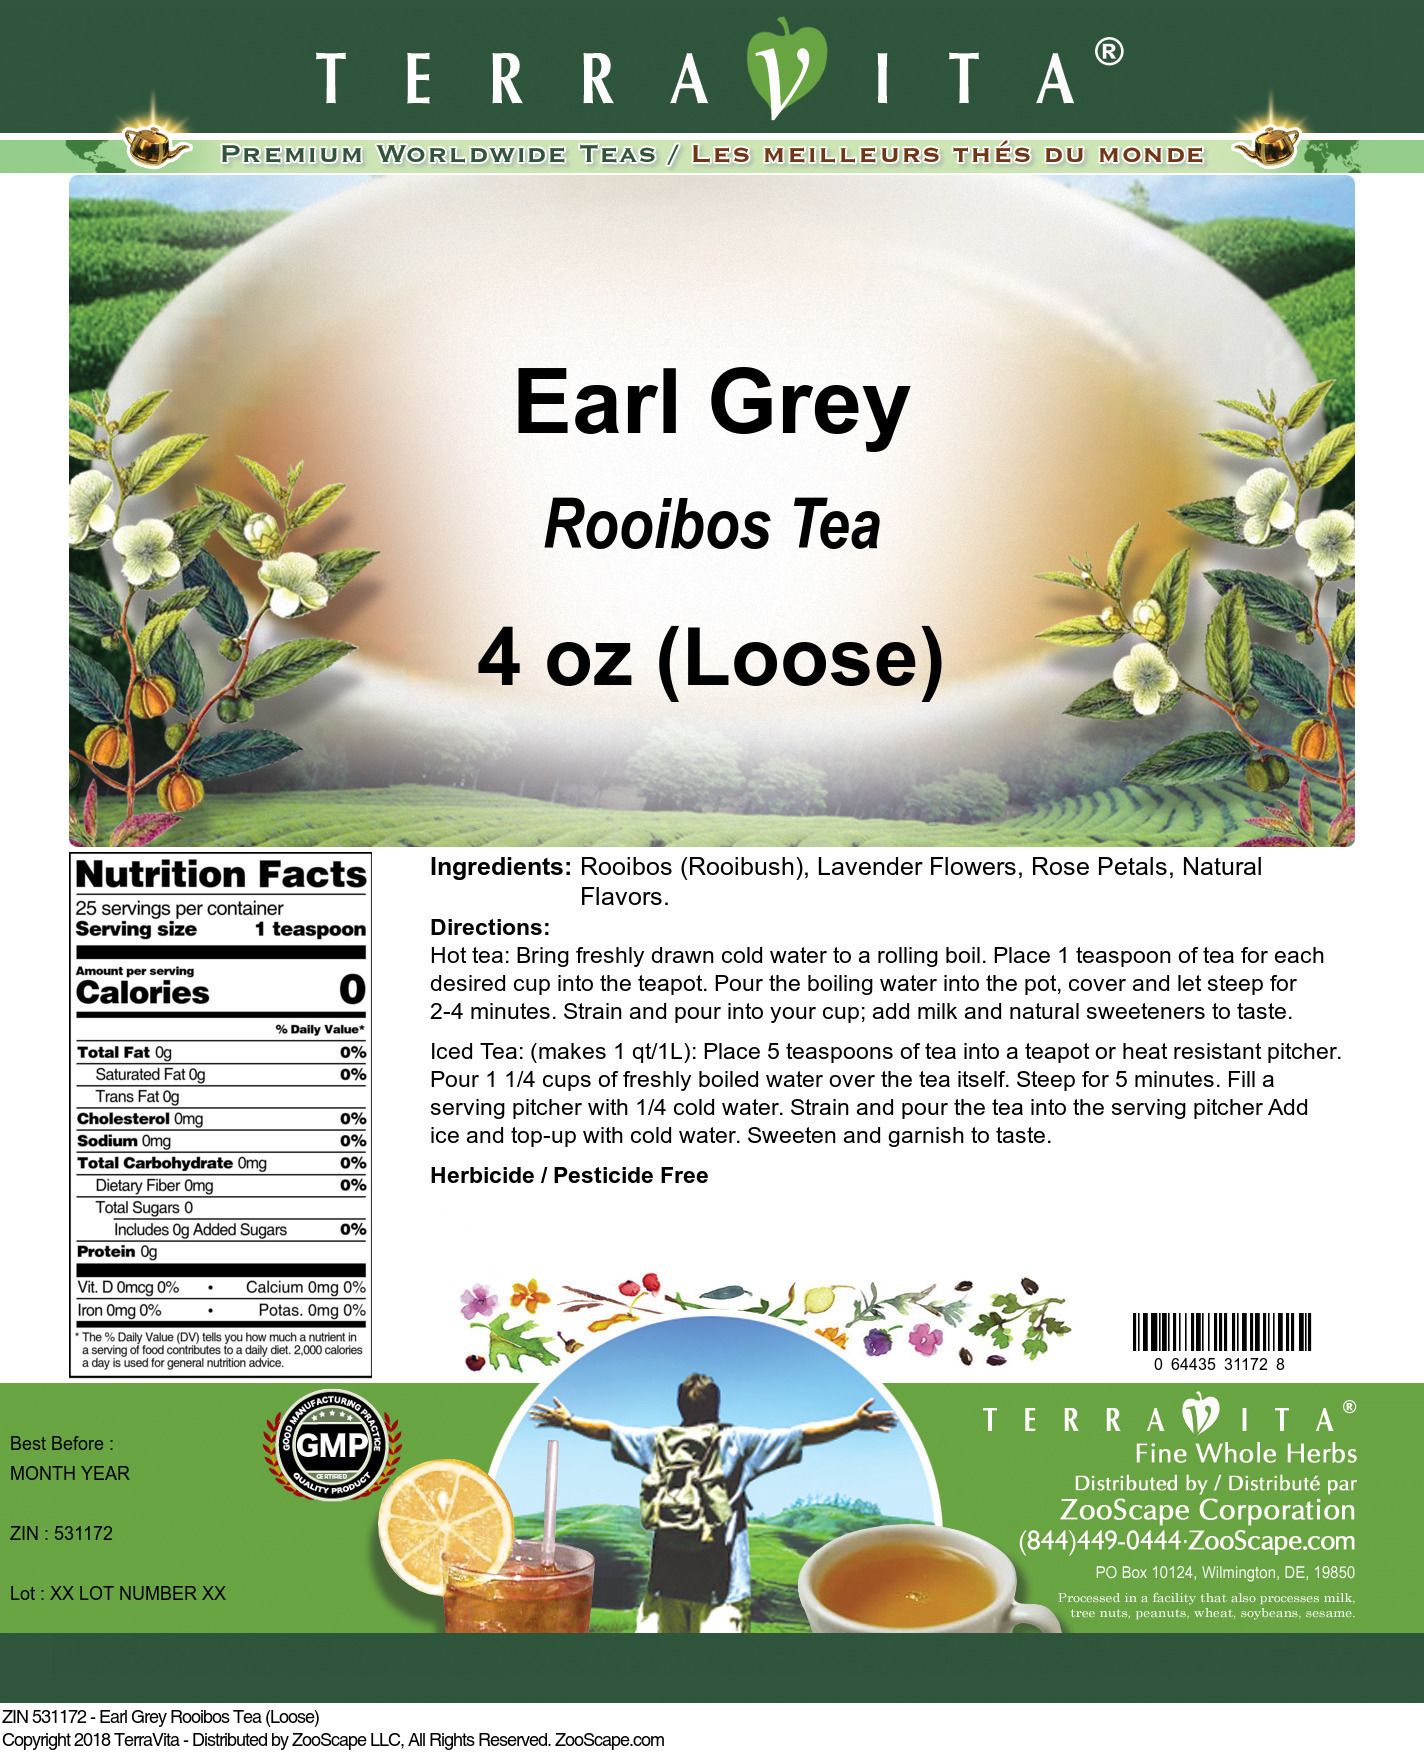 Earl Grey Rooibos Tea (Loose) - Label